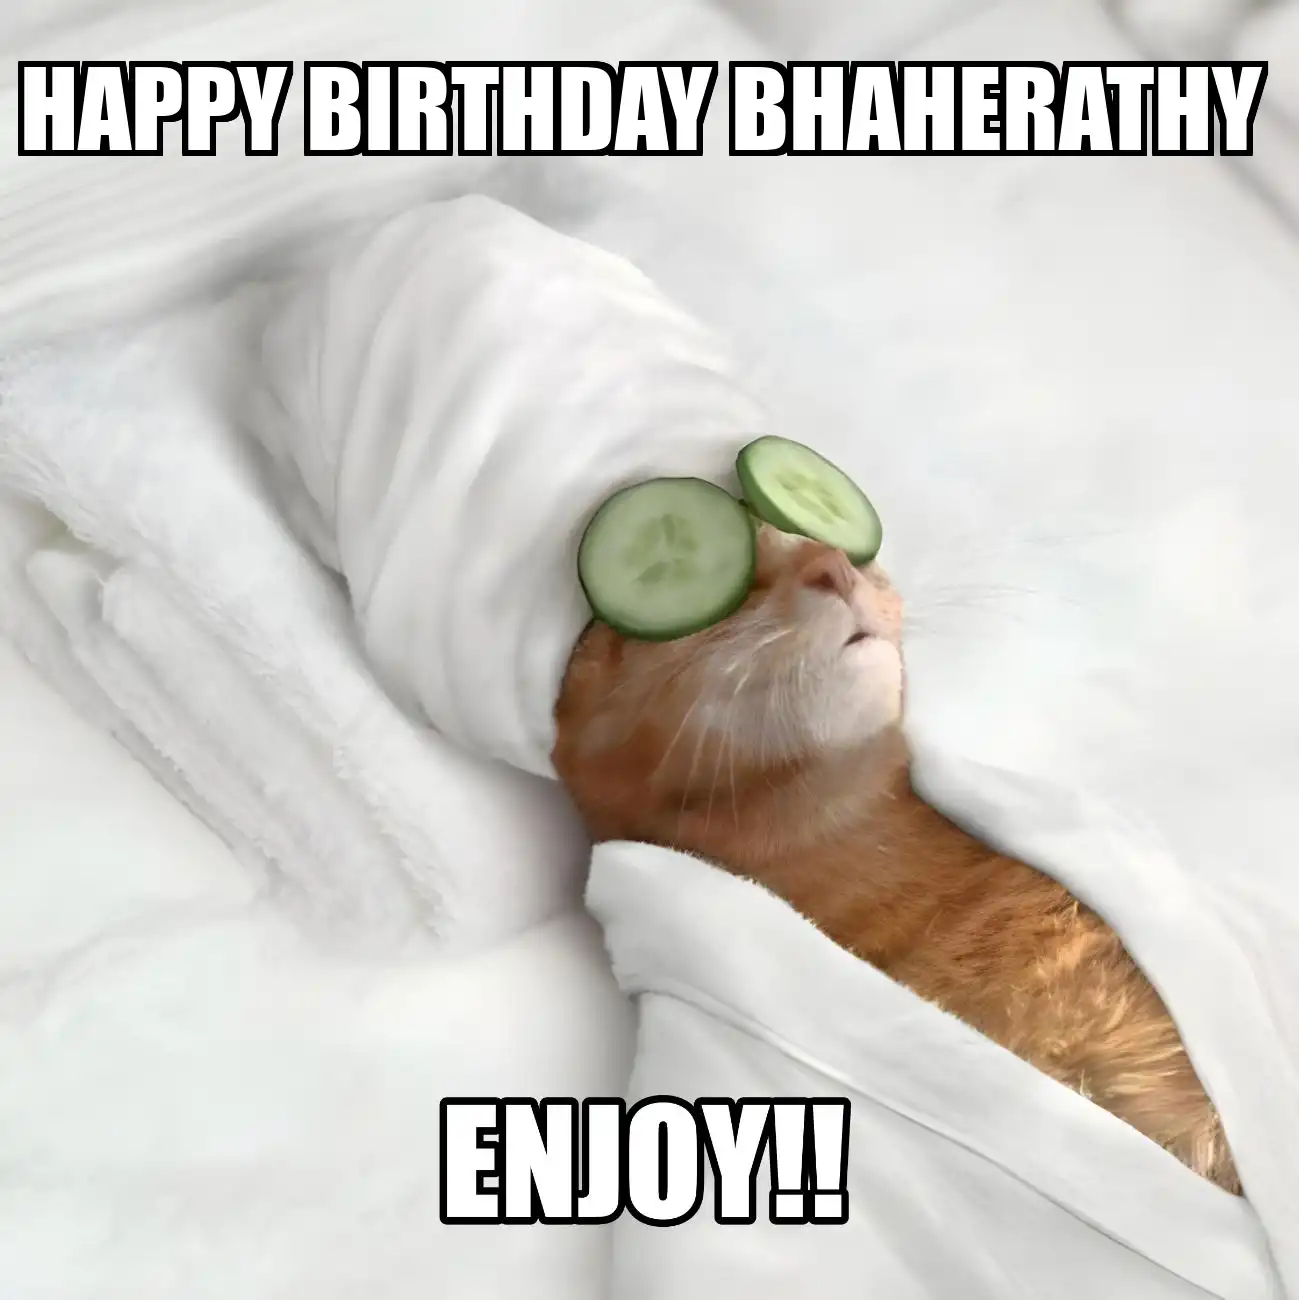 Happy Birthday Bhaherathy Enjoy Cat Meme